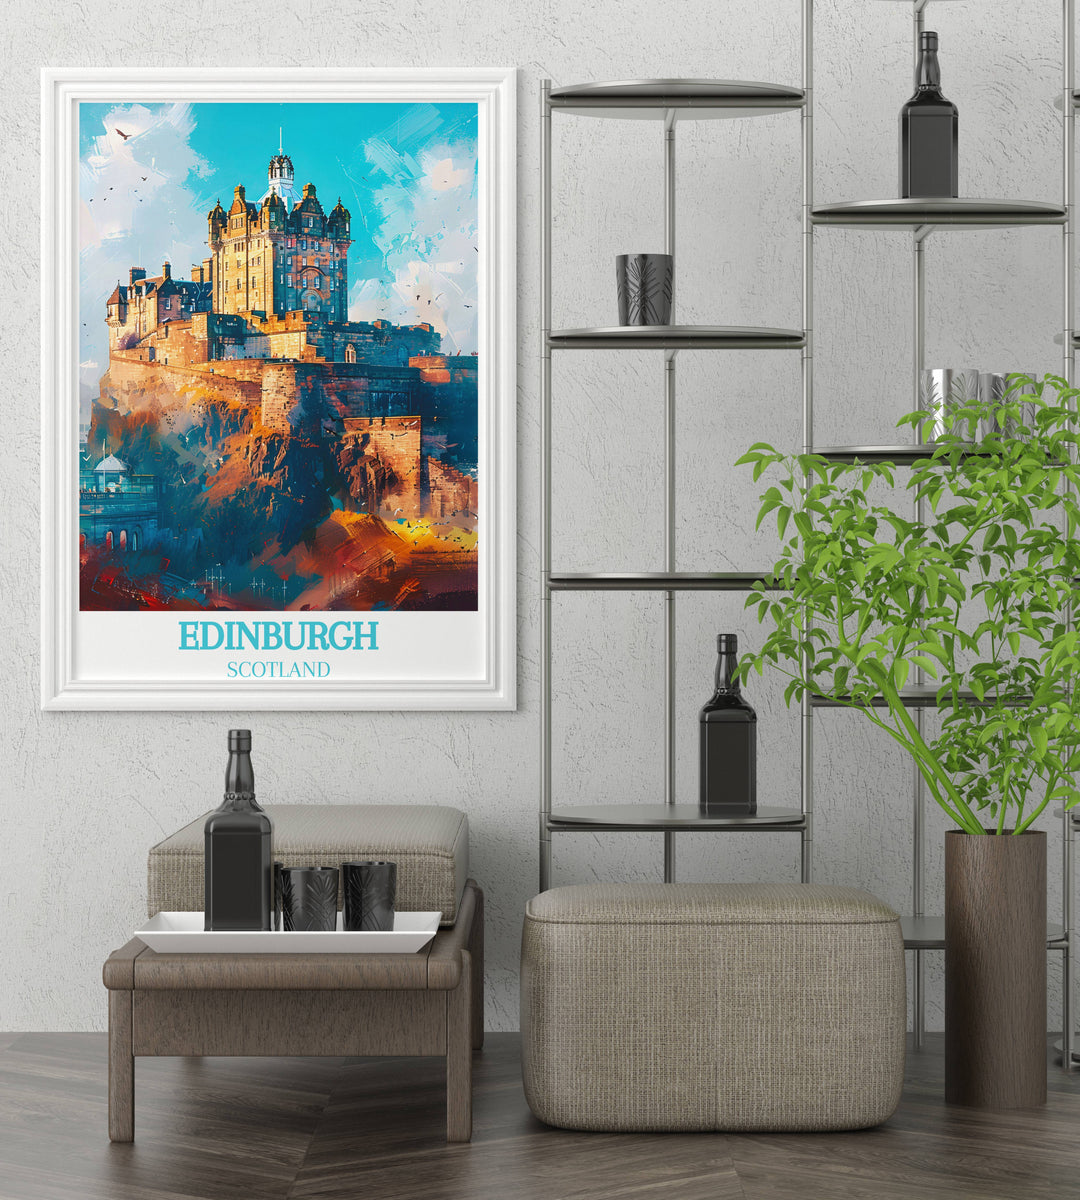 Enchanting Edinburgh Castle Art Print - A Majestic Scottish Gift for Any Space